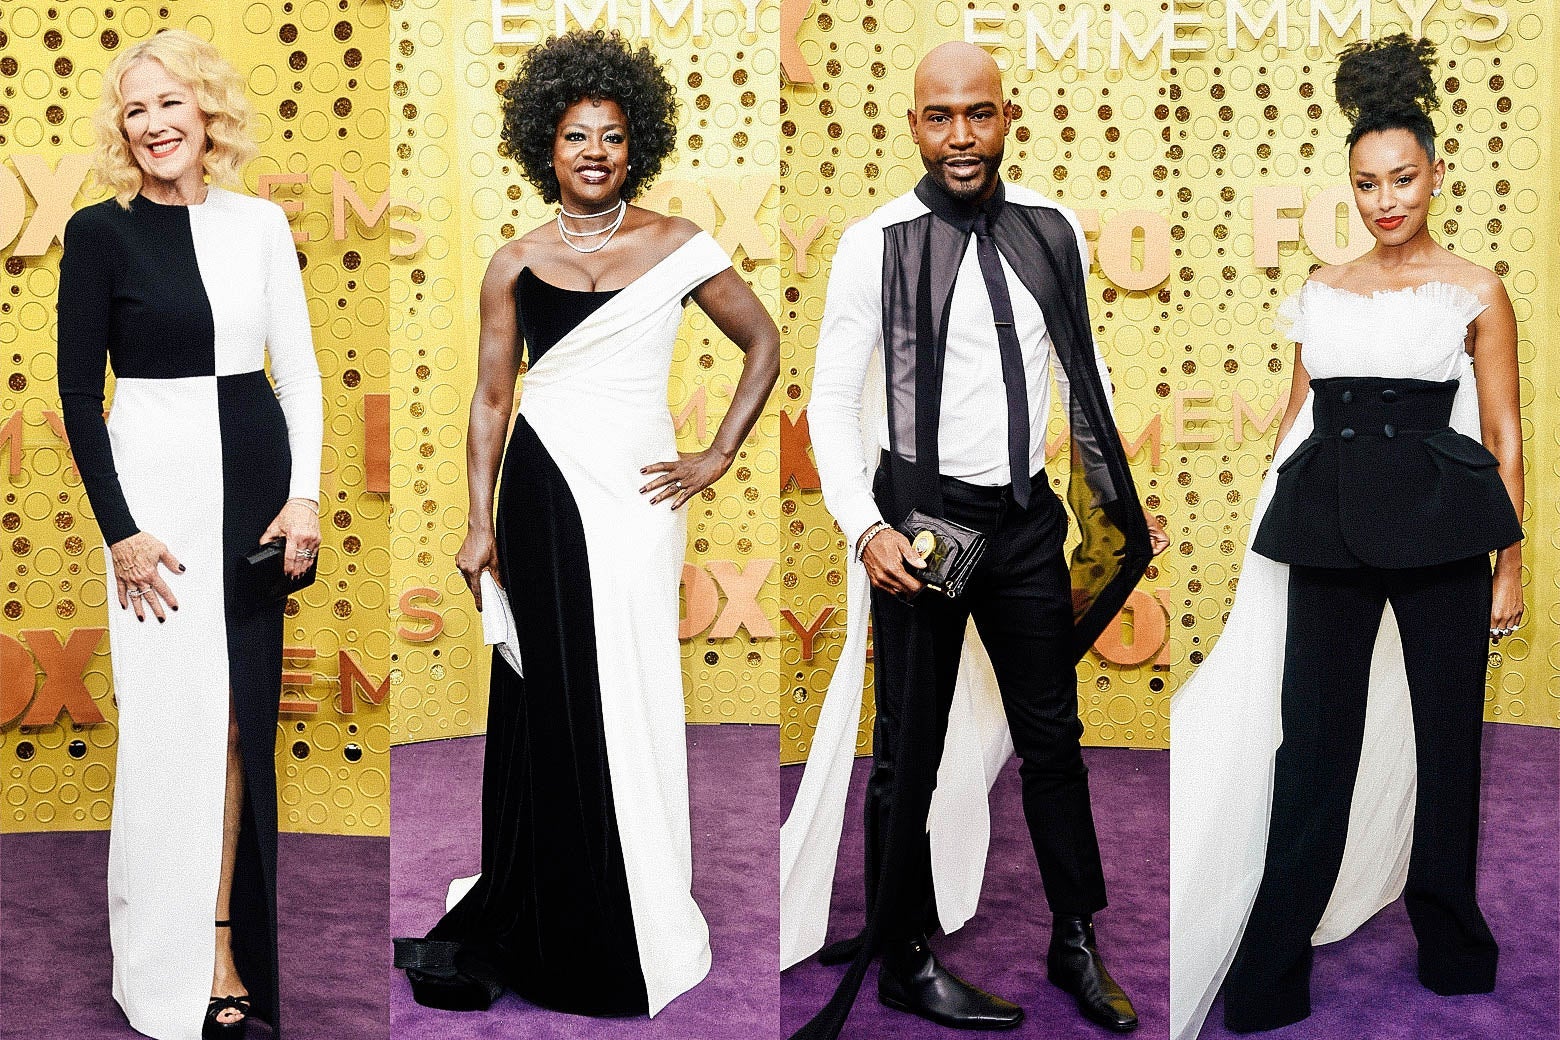 Catherine O’Hara; Viola Davis; Karamo Brown; Melanie Liburd on the Emmys purple carpet.